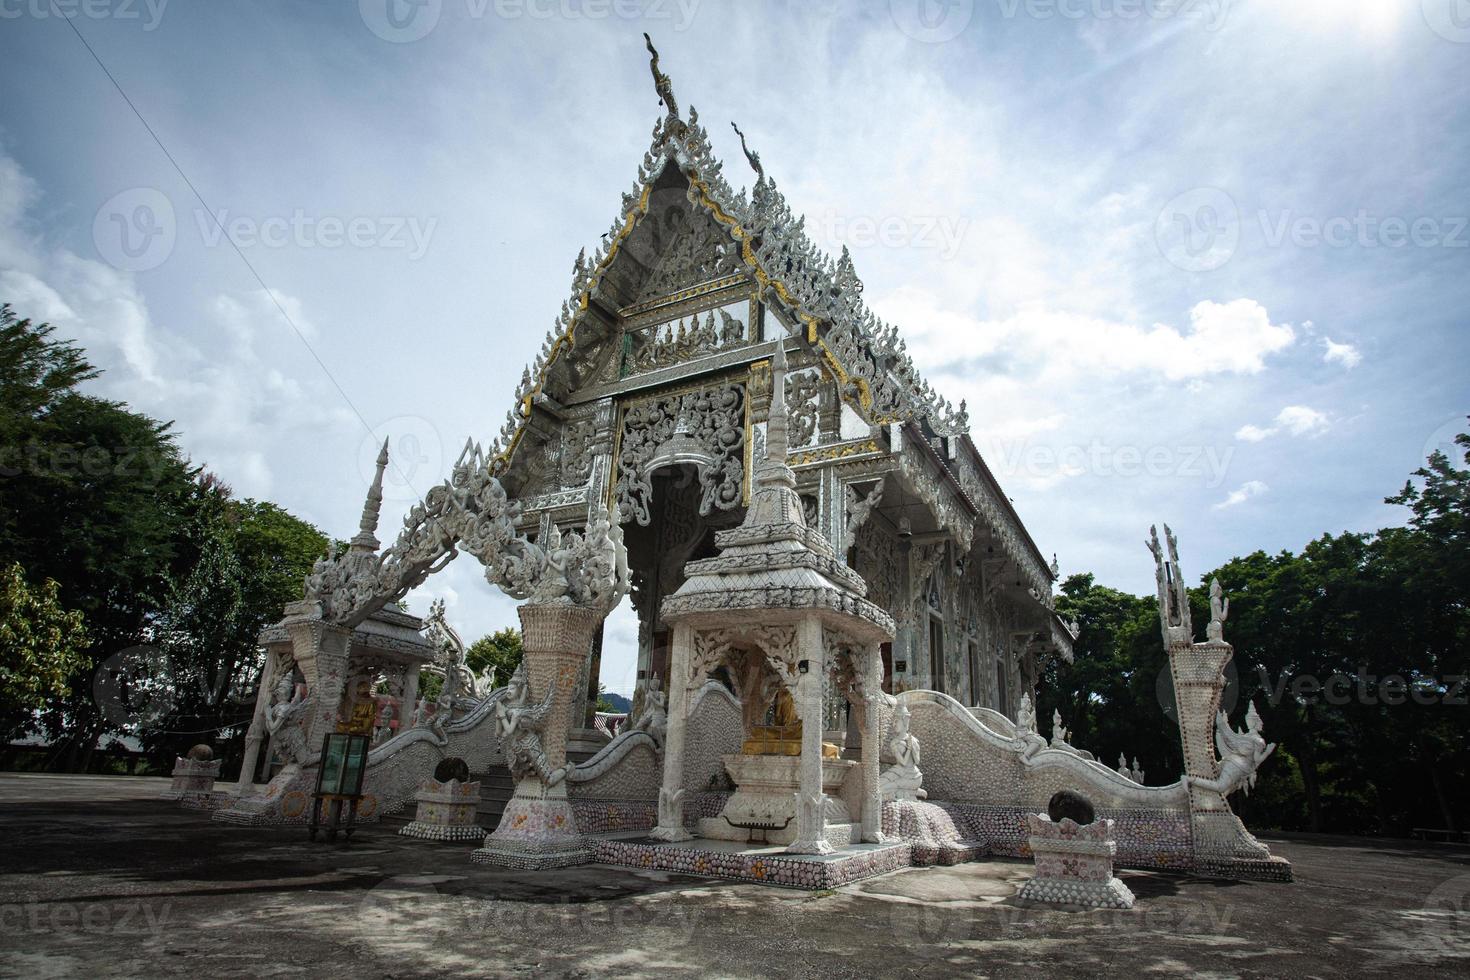 mosteiro no distrito de Ban kha, província de Ratchaburi, Tailândia foto